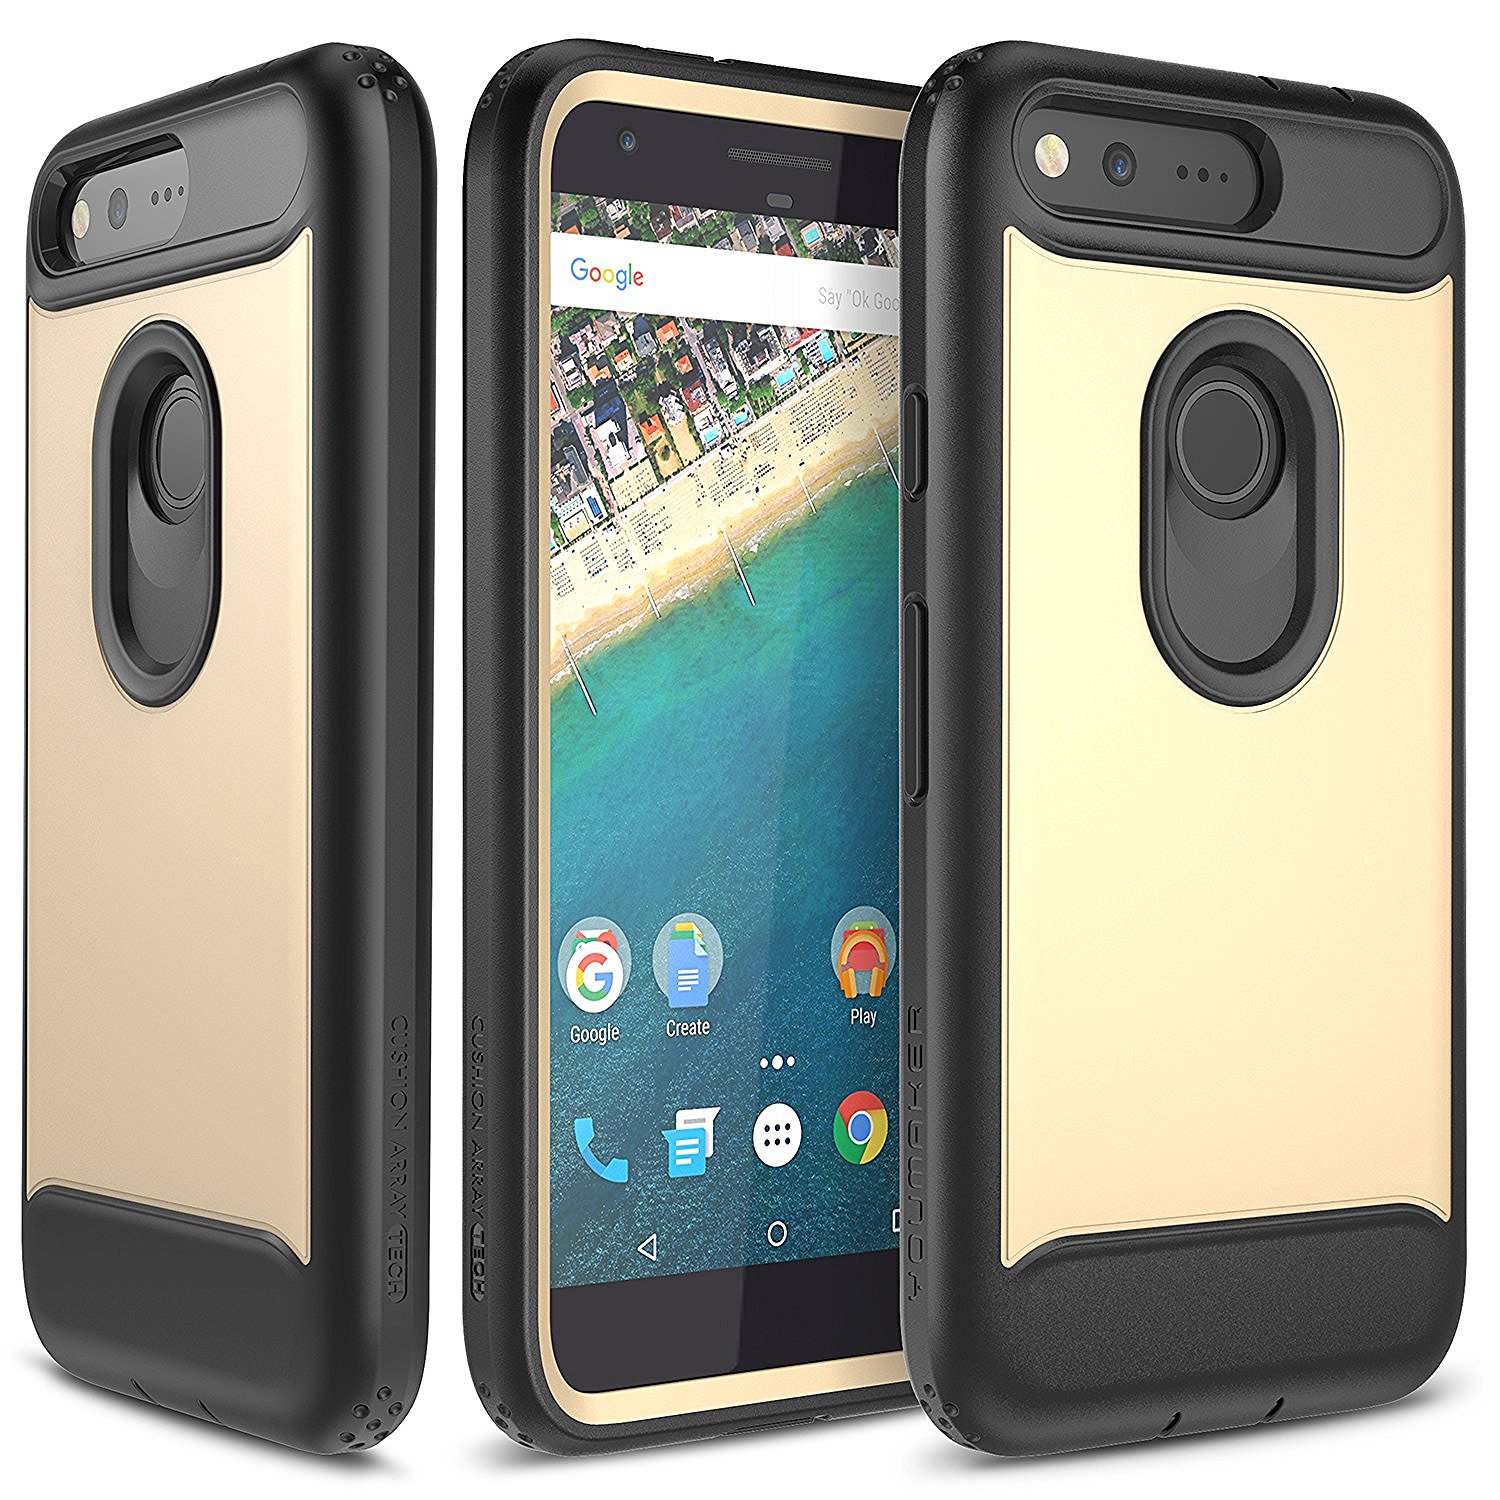 pixel phone cases, google pixel phone cases, pixel cases, google pixel cases, best pixel cases, best google pixel cases, google pixel wallet case